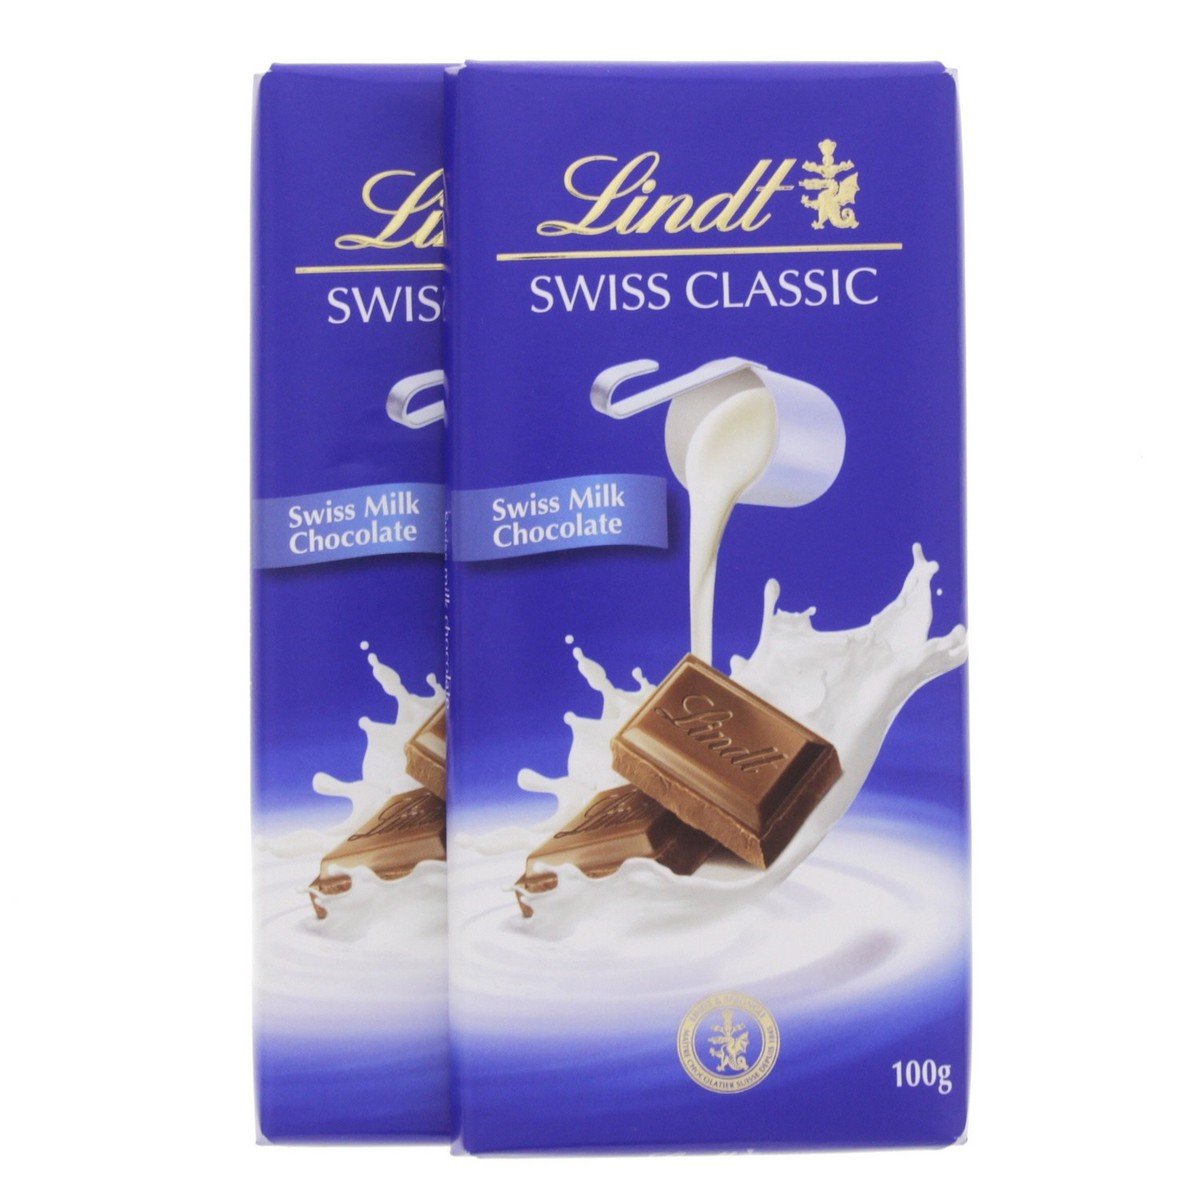 Lindt Swiss Classic Swiss Milk Chocolate 2 x 100 g